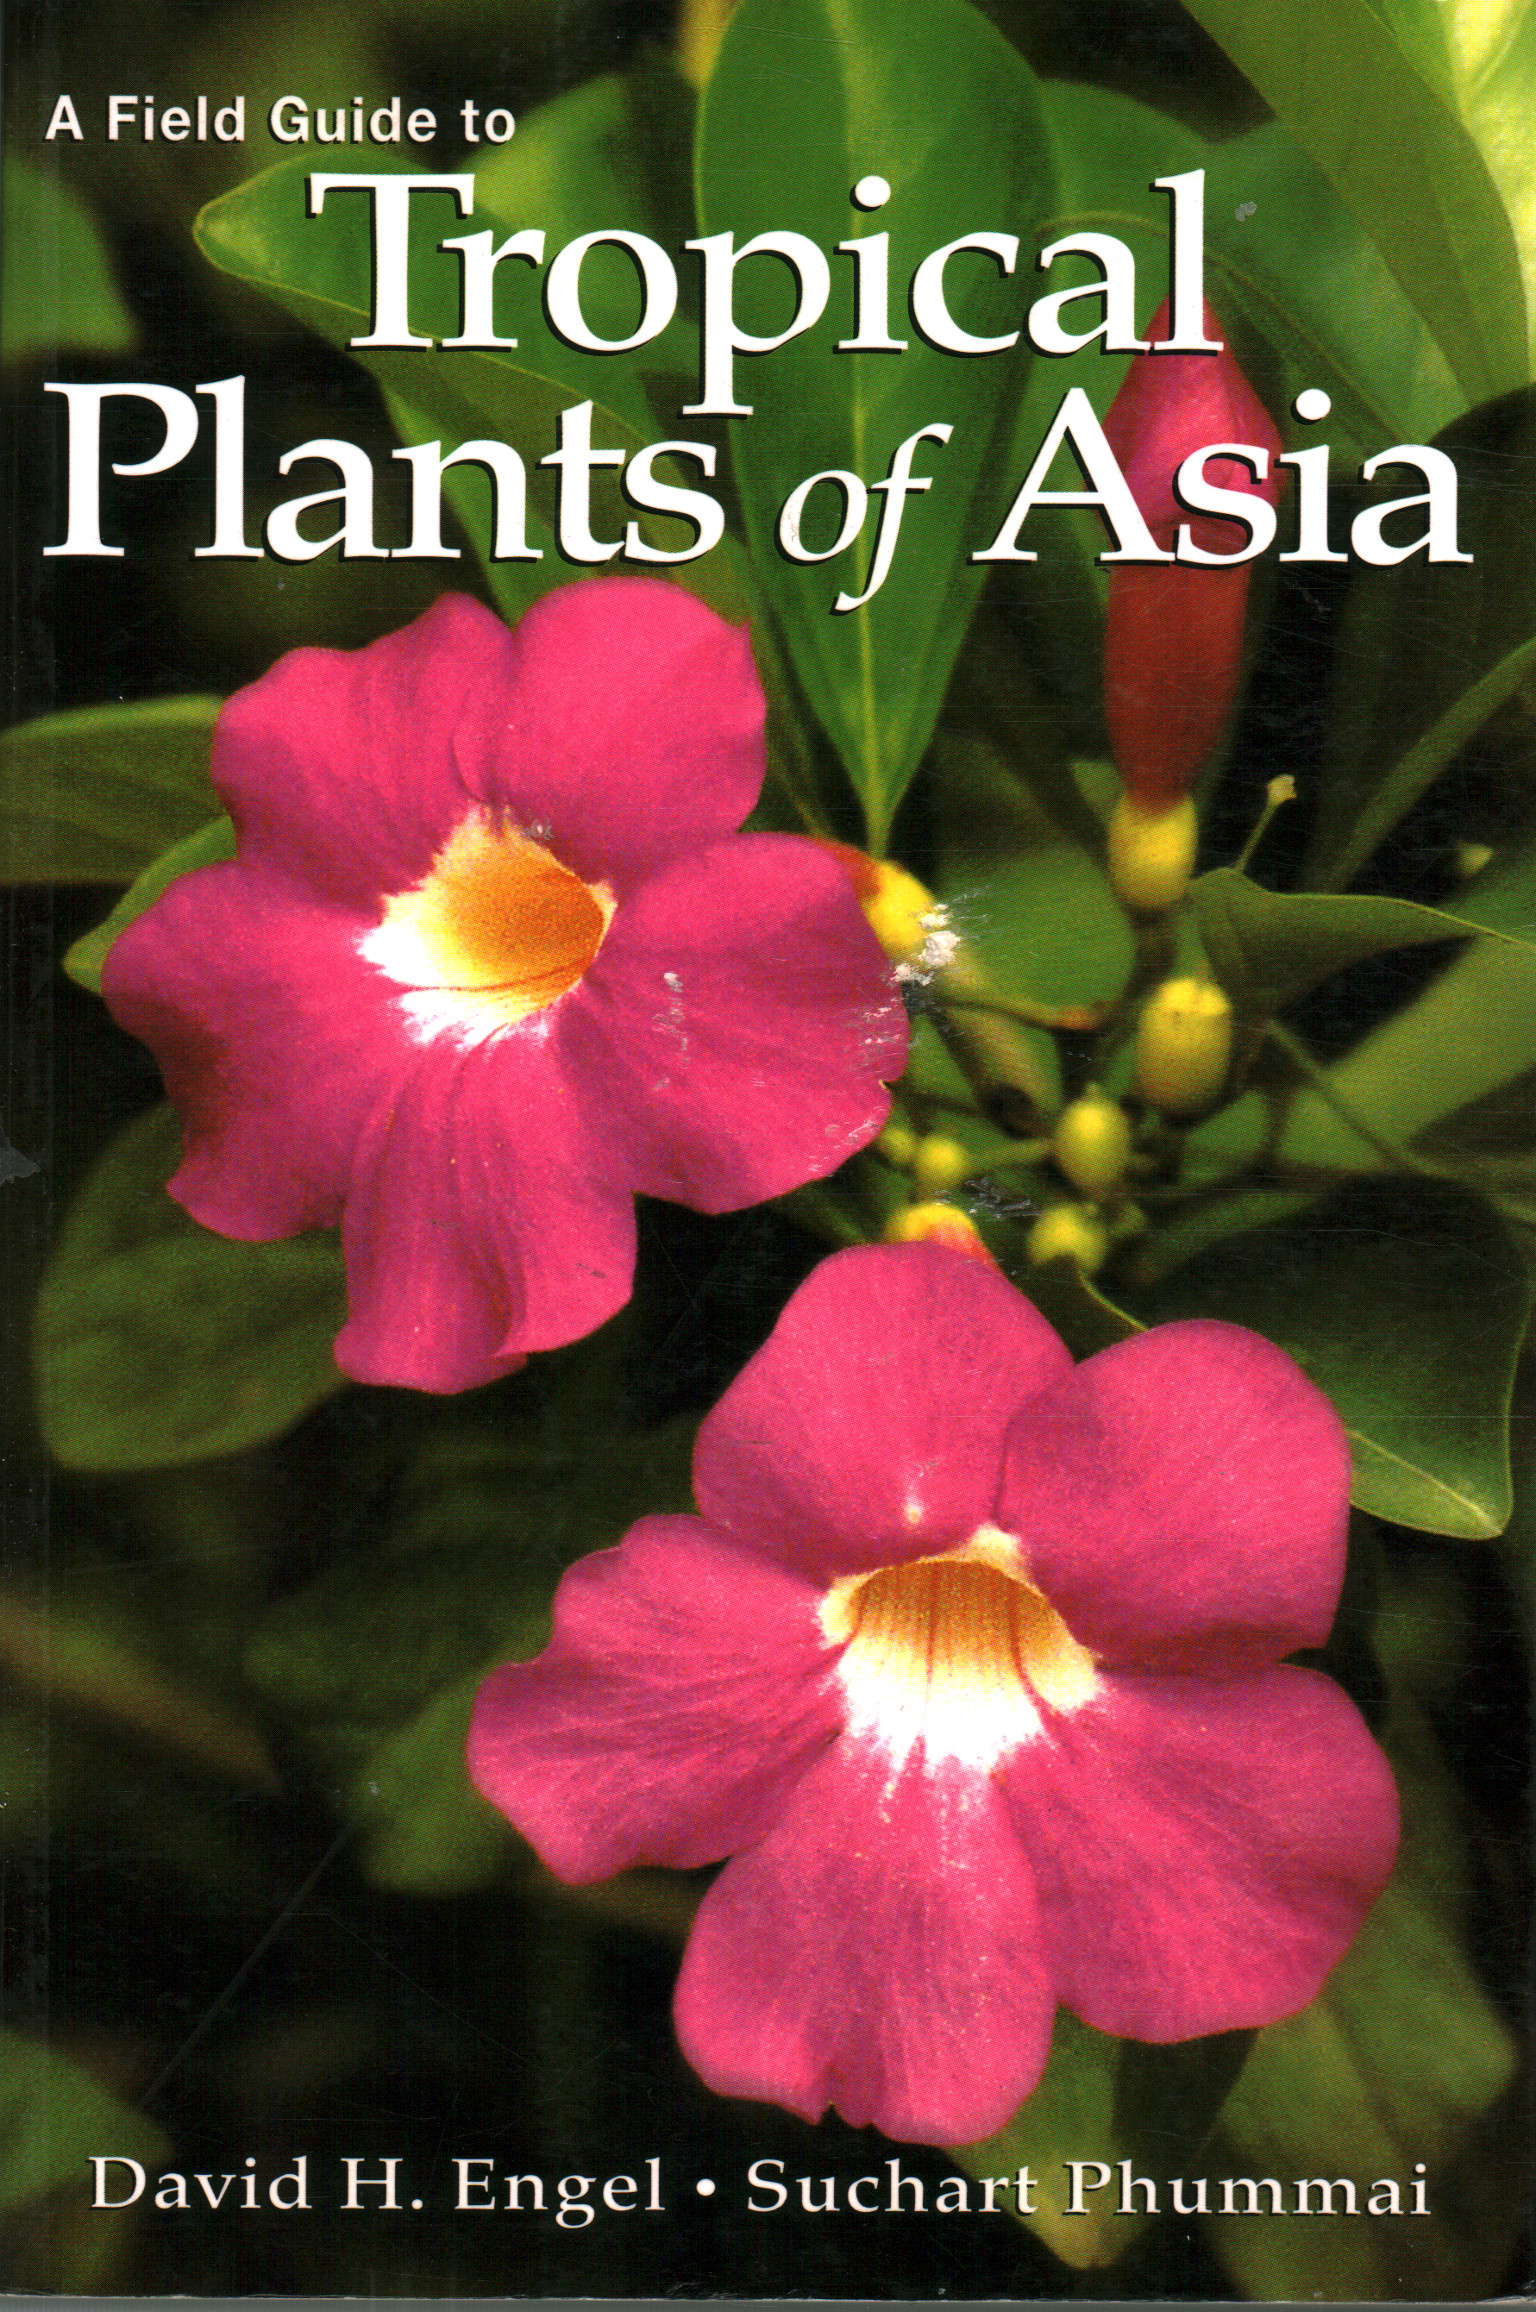 A field guide to tropical plants of Asia, David H. Engel Suchart Phummai